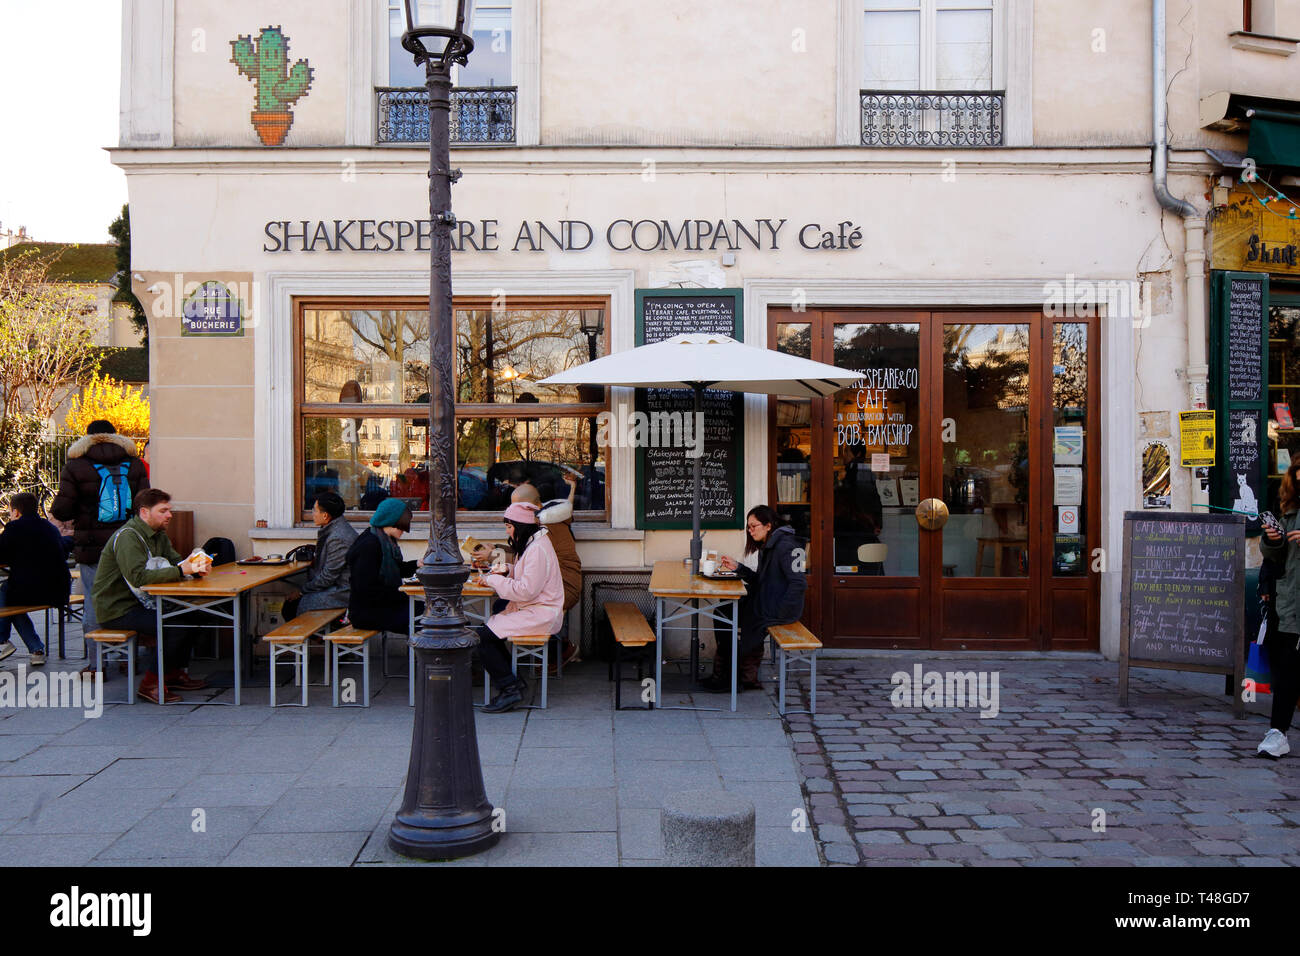 Shakespeare & Company Cafe, 37 Rue de la Bûcherie, Paris, France. exterior storefront of a cafe attached to a bookstore. Stock Photo